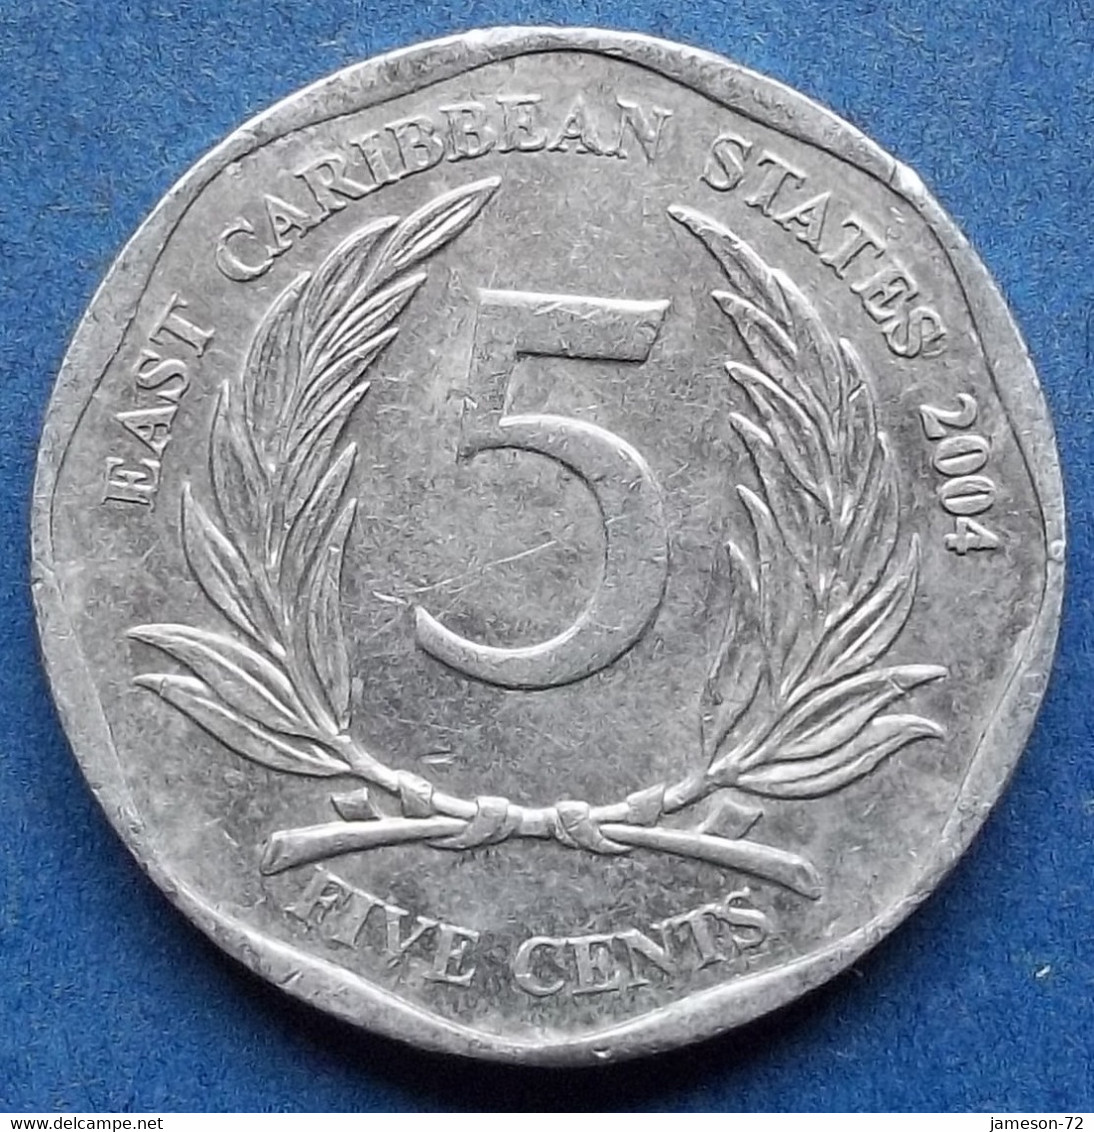 EAST CARIBBEAN STATES - 5 Cents 2004 KM# 36 Elizabeth II - Edelweiss Coins . - Caraïbes Orientales (Etats Des)